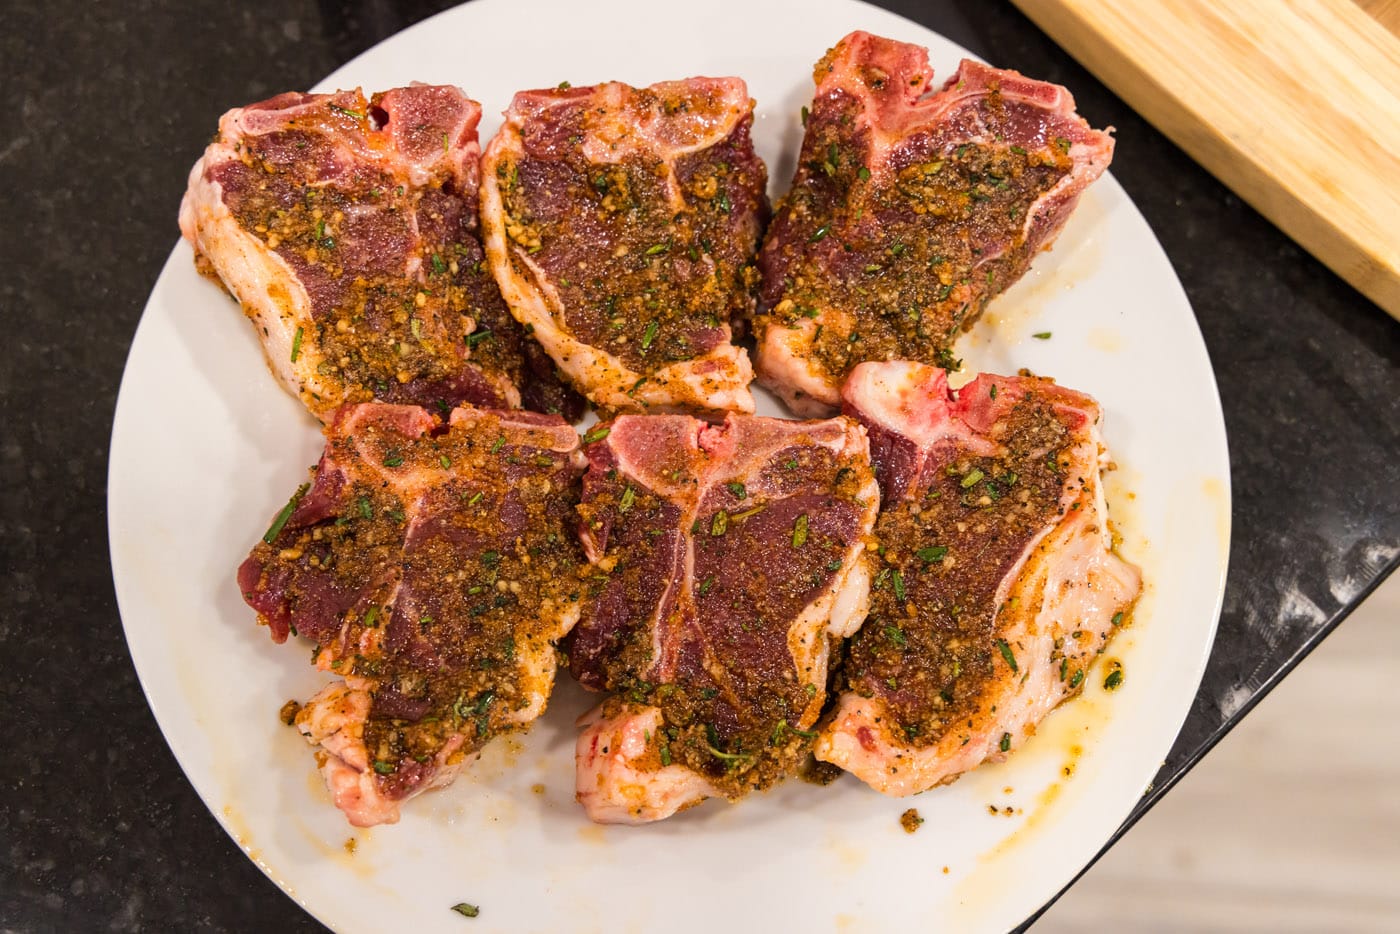 seasoned lamb loin chops on a plate